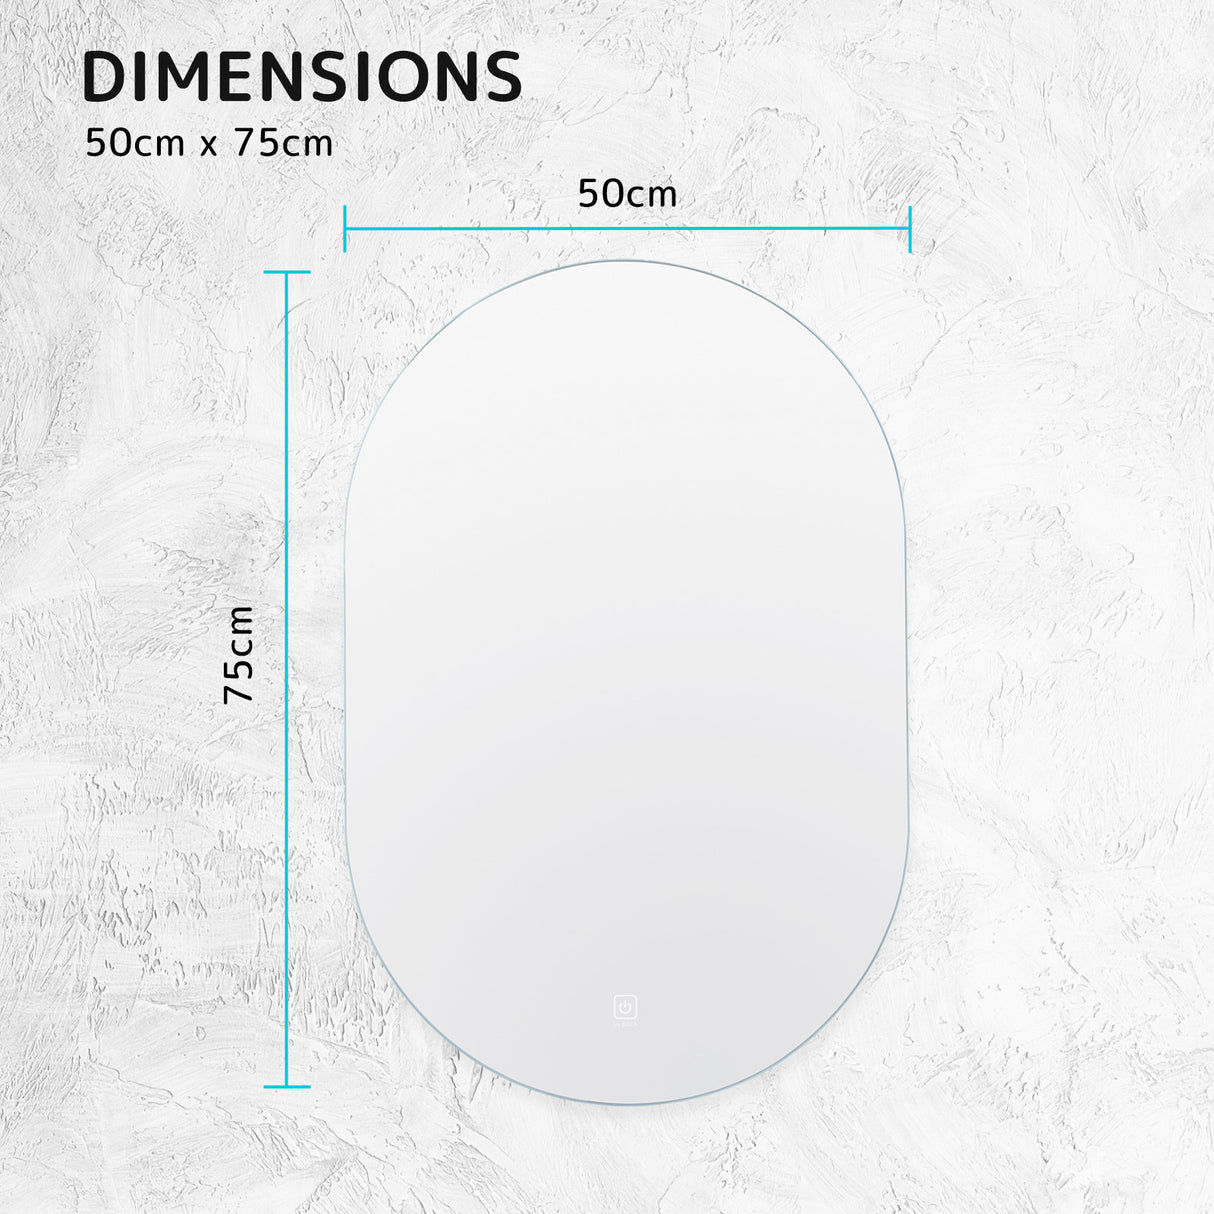 La Bella LED Wall Mirror Oval Touch Anti-Fog Makeup Decor Bathroom Vanity 50x75cm